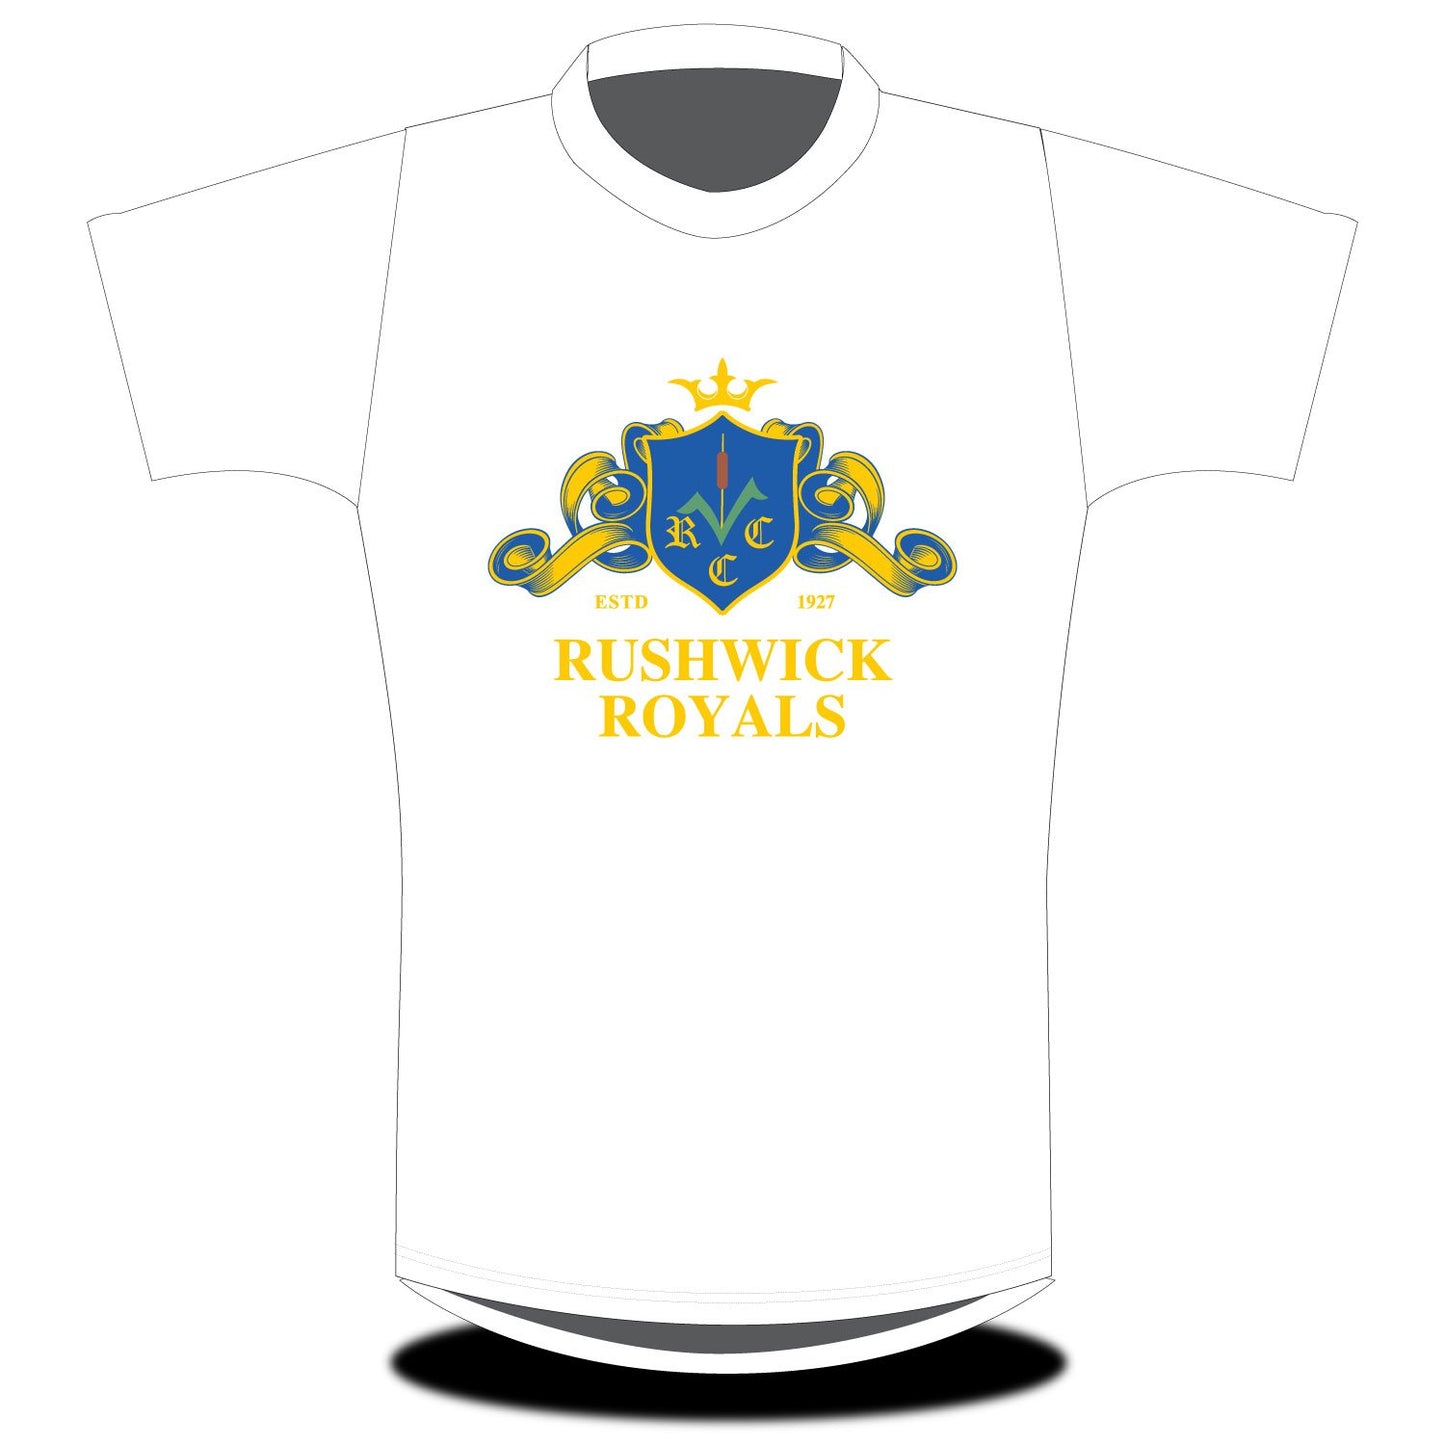 rushwick royals tshirt white front